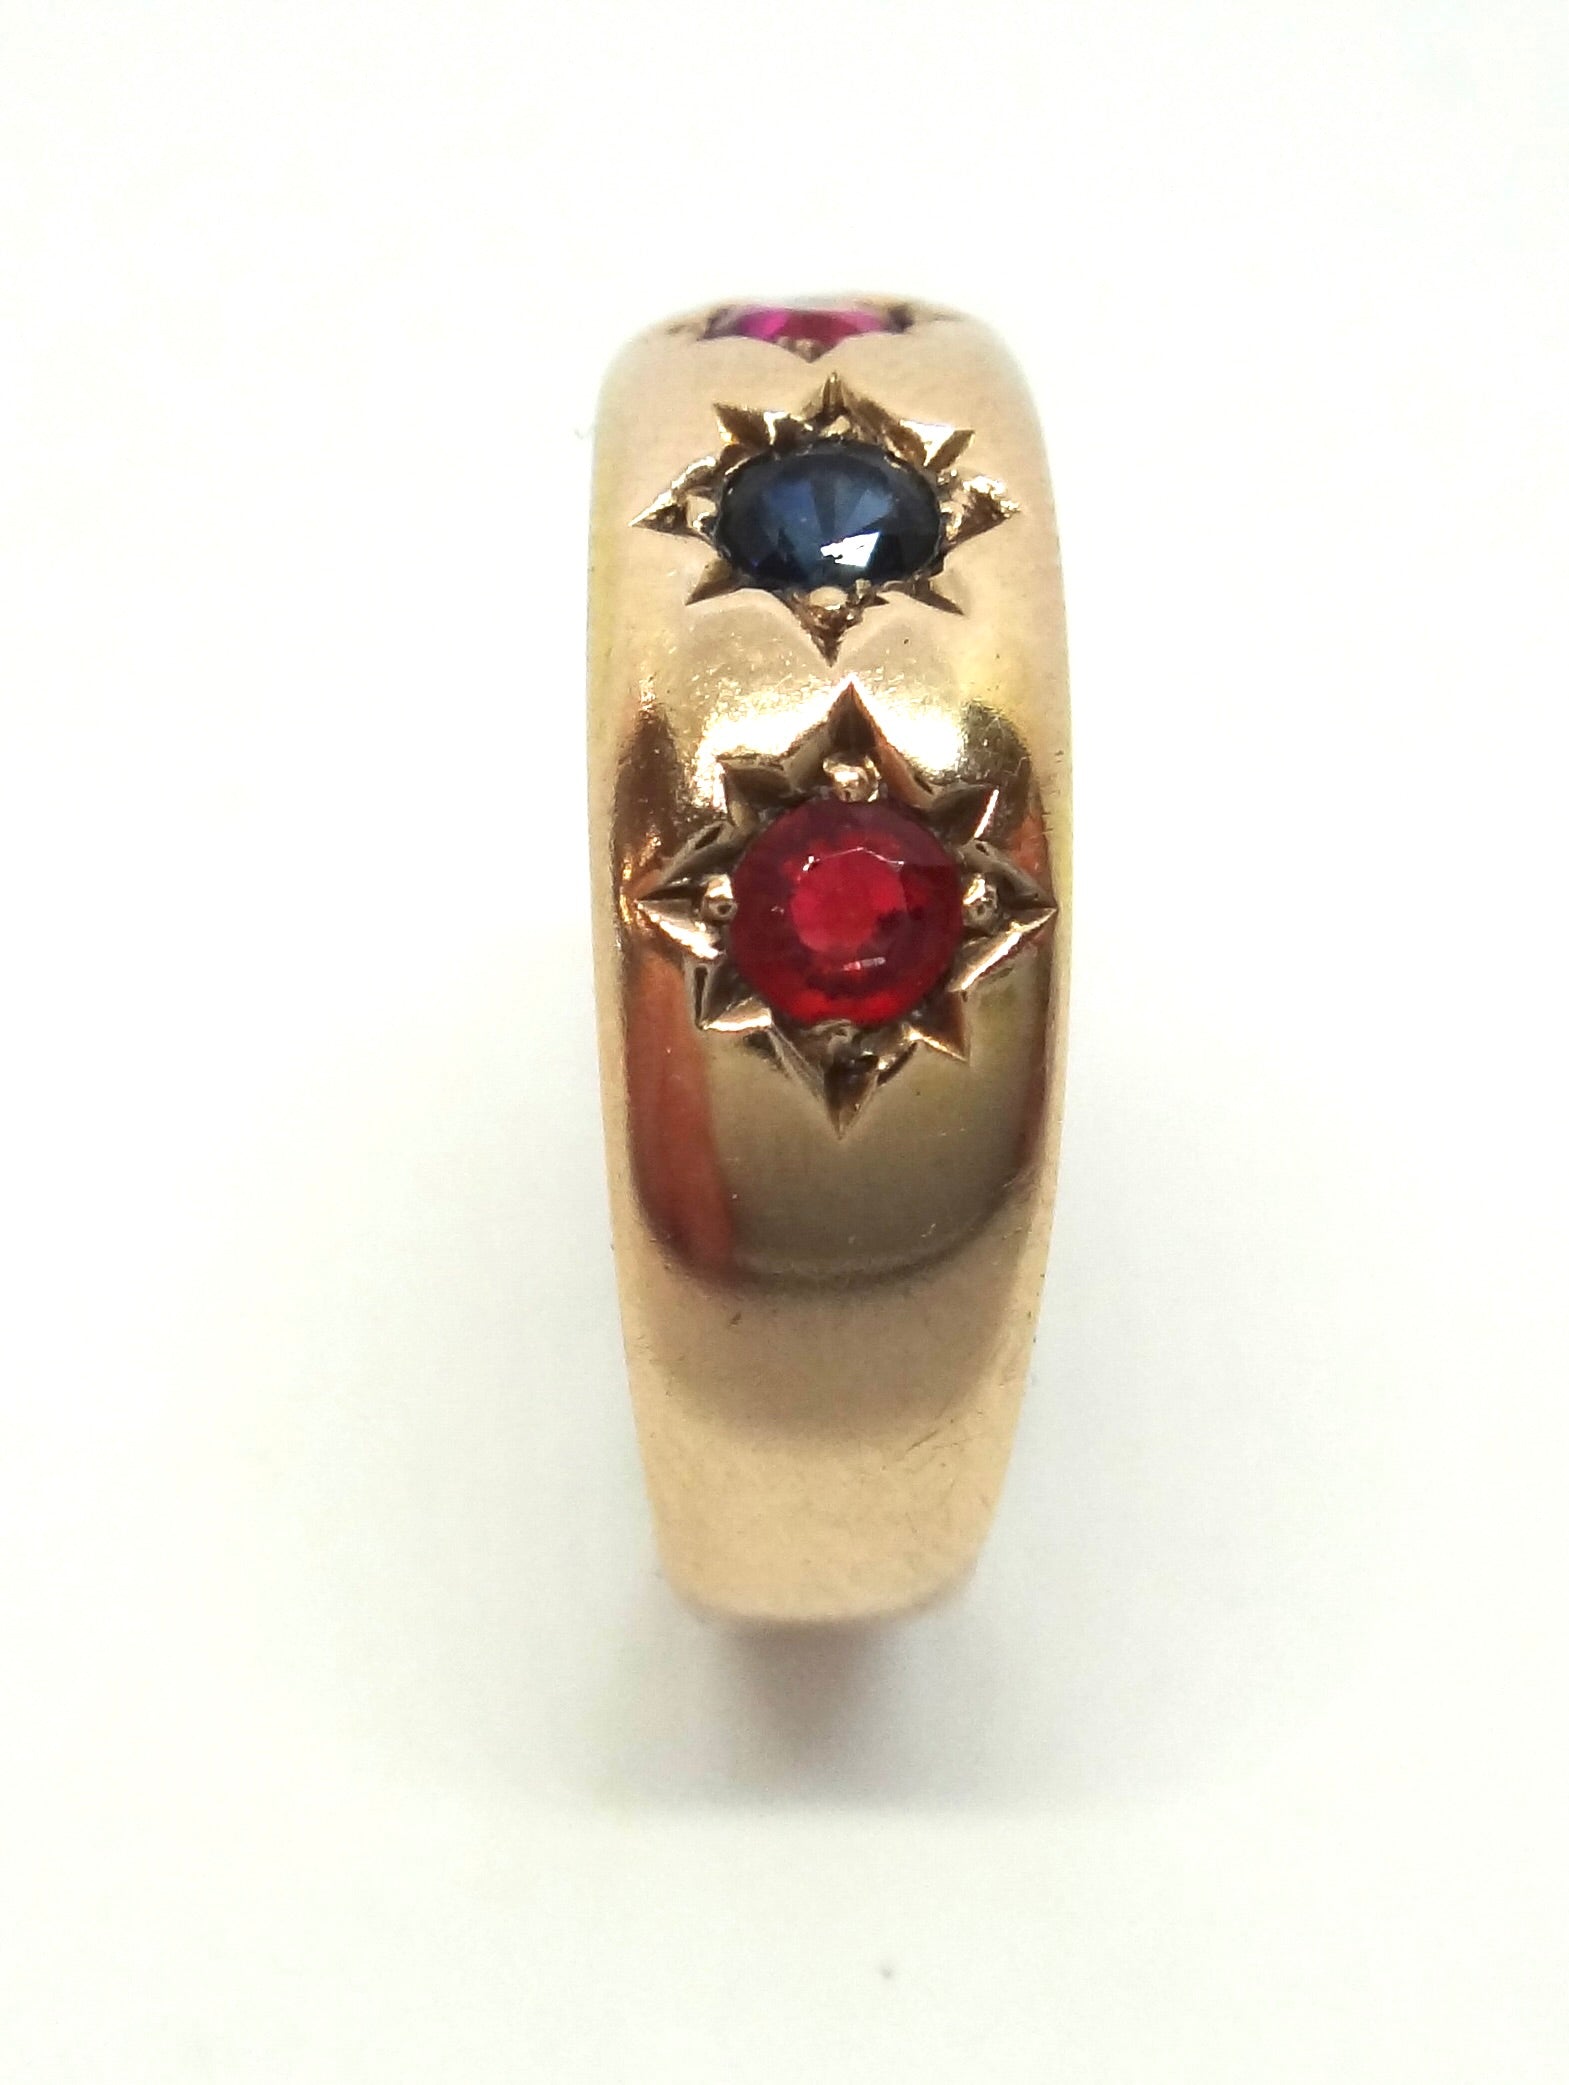 ANTIQUE 15ct GOLD, Ruby, Garnet & Sapphire Ring c.1900